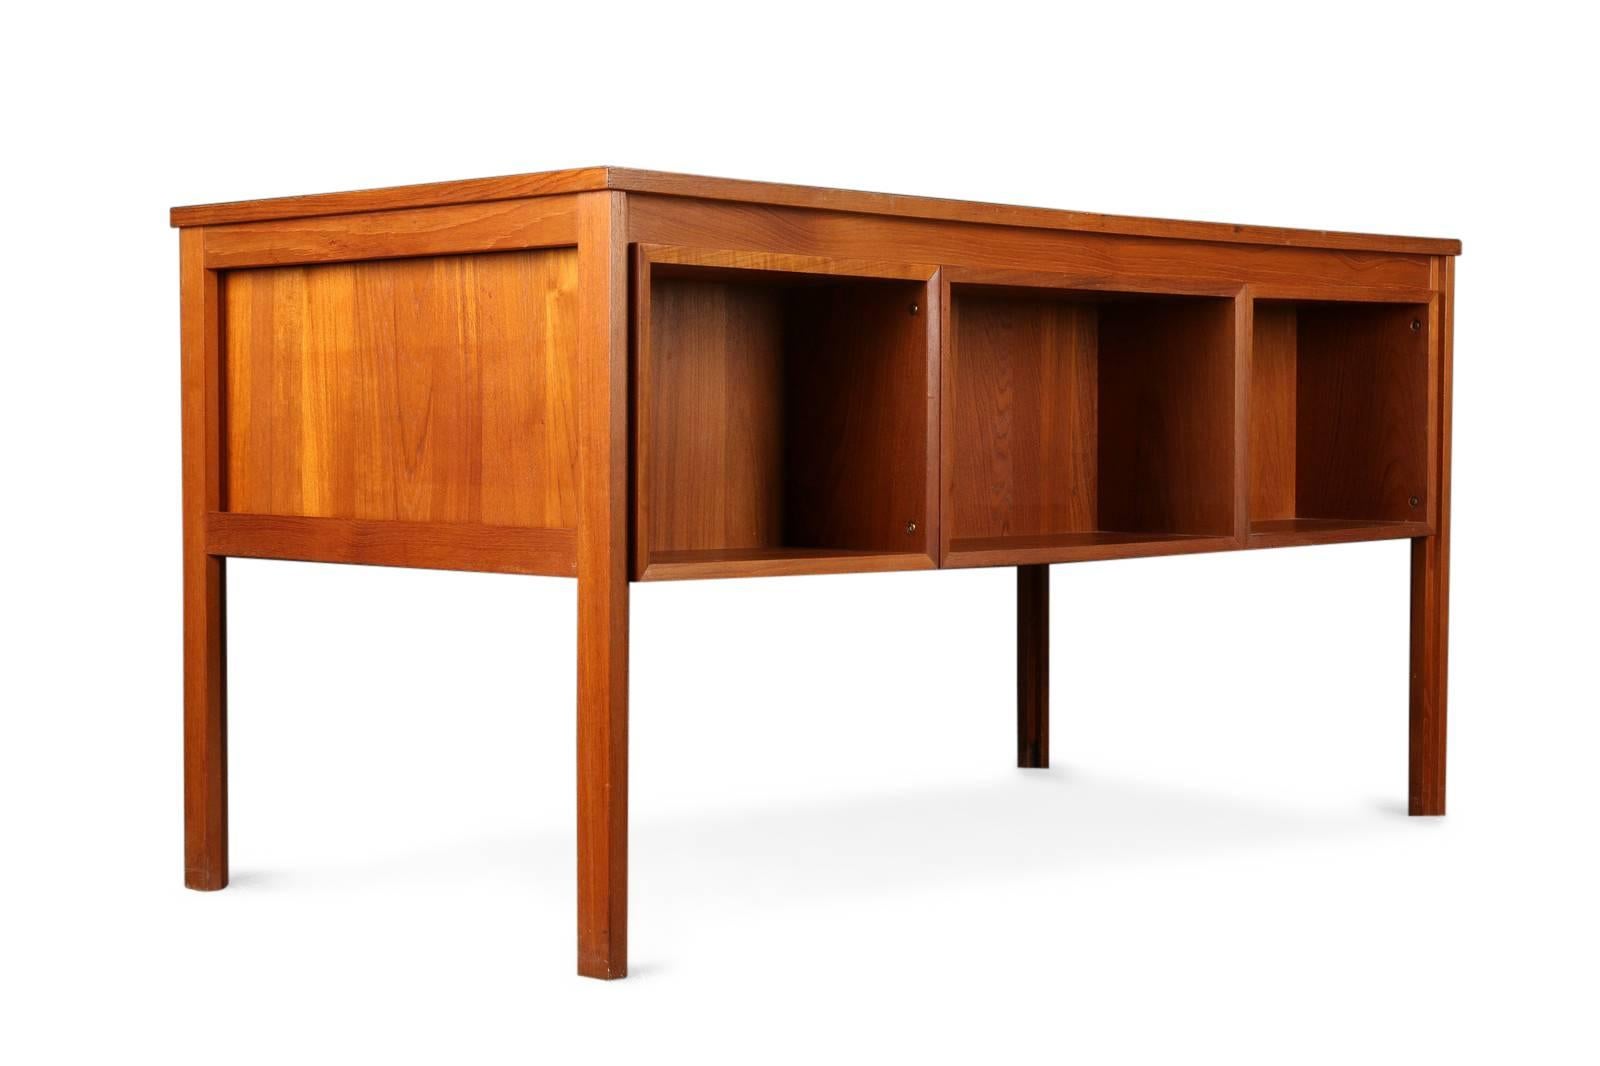 Teak table, 1960s redened teak wood desk, 1960s. Measures: H 71.5, 140 x 70 cm. Traces of use.